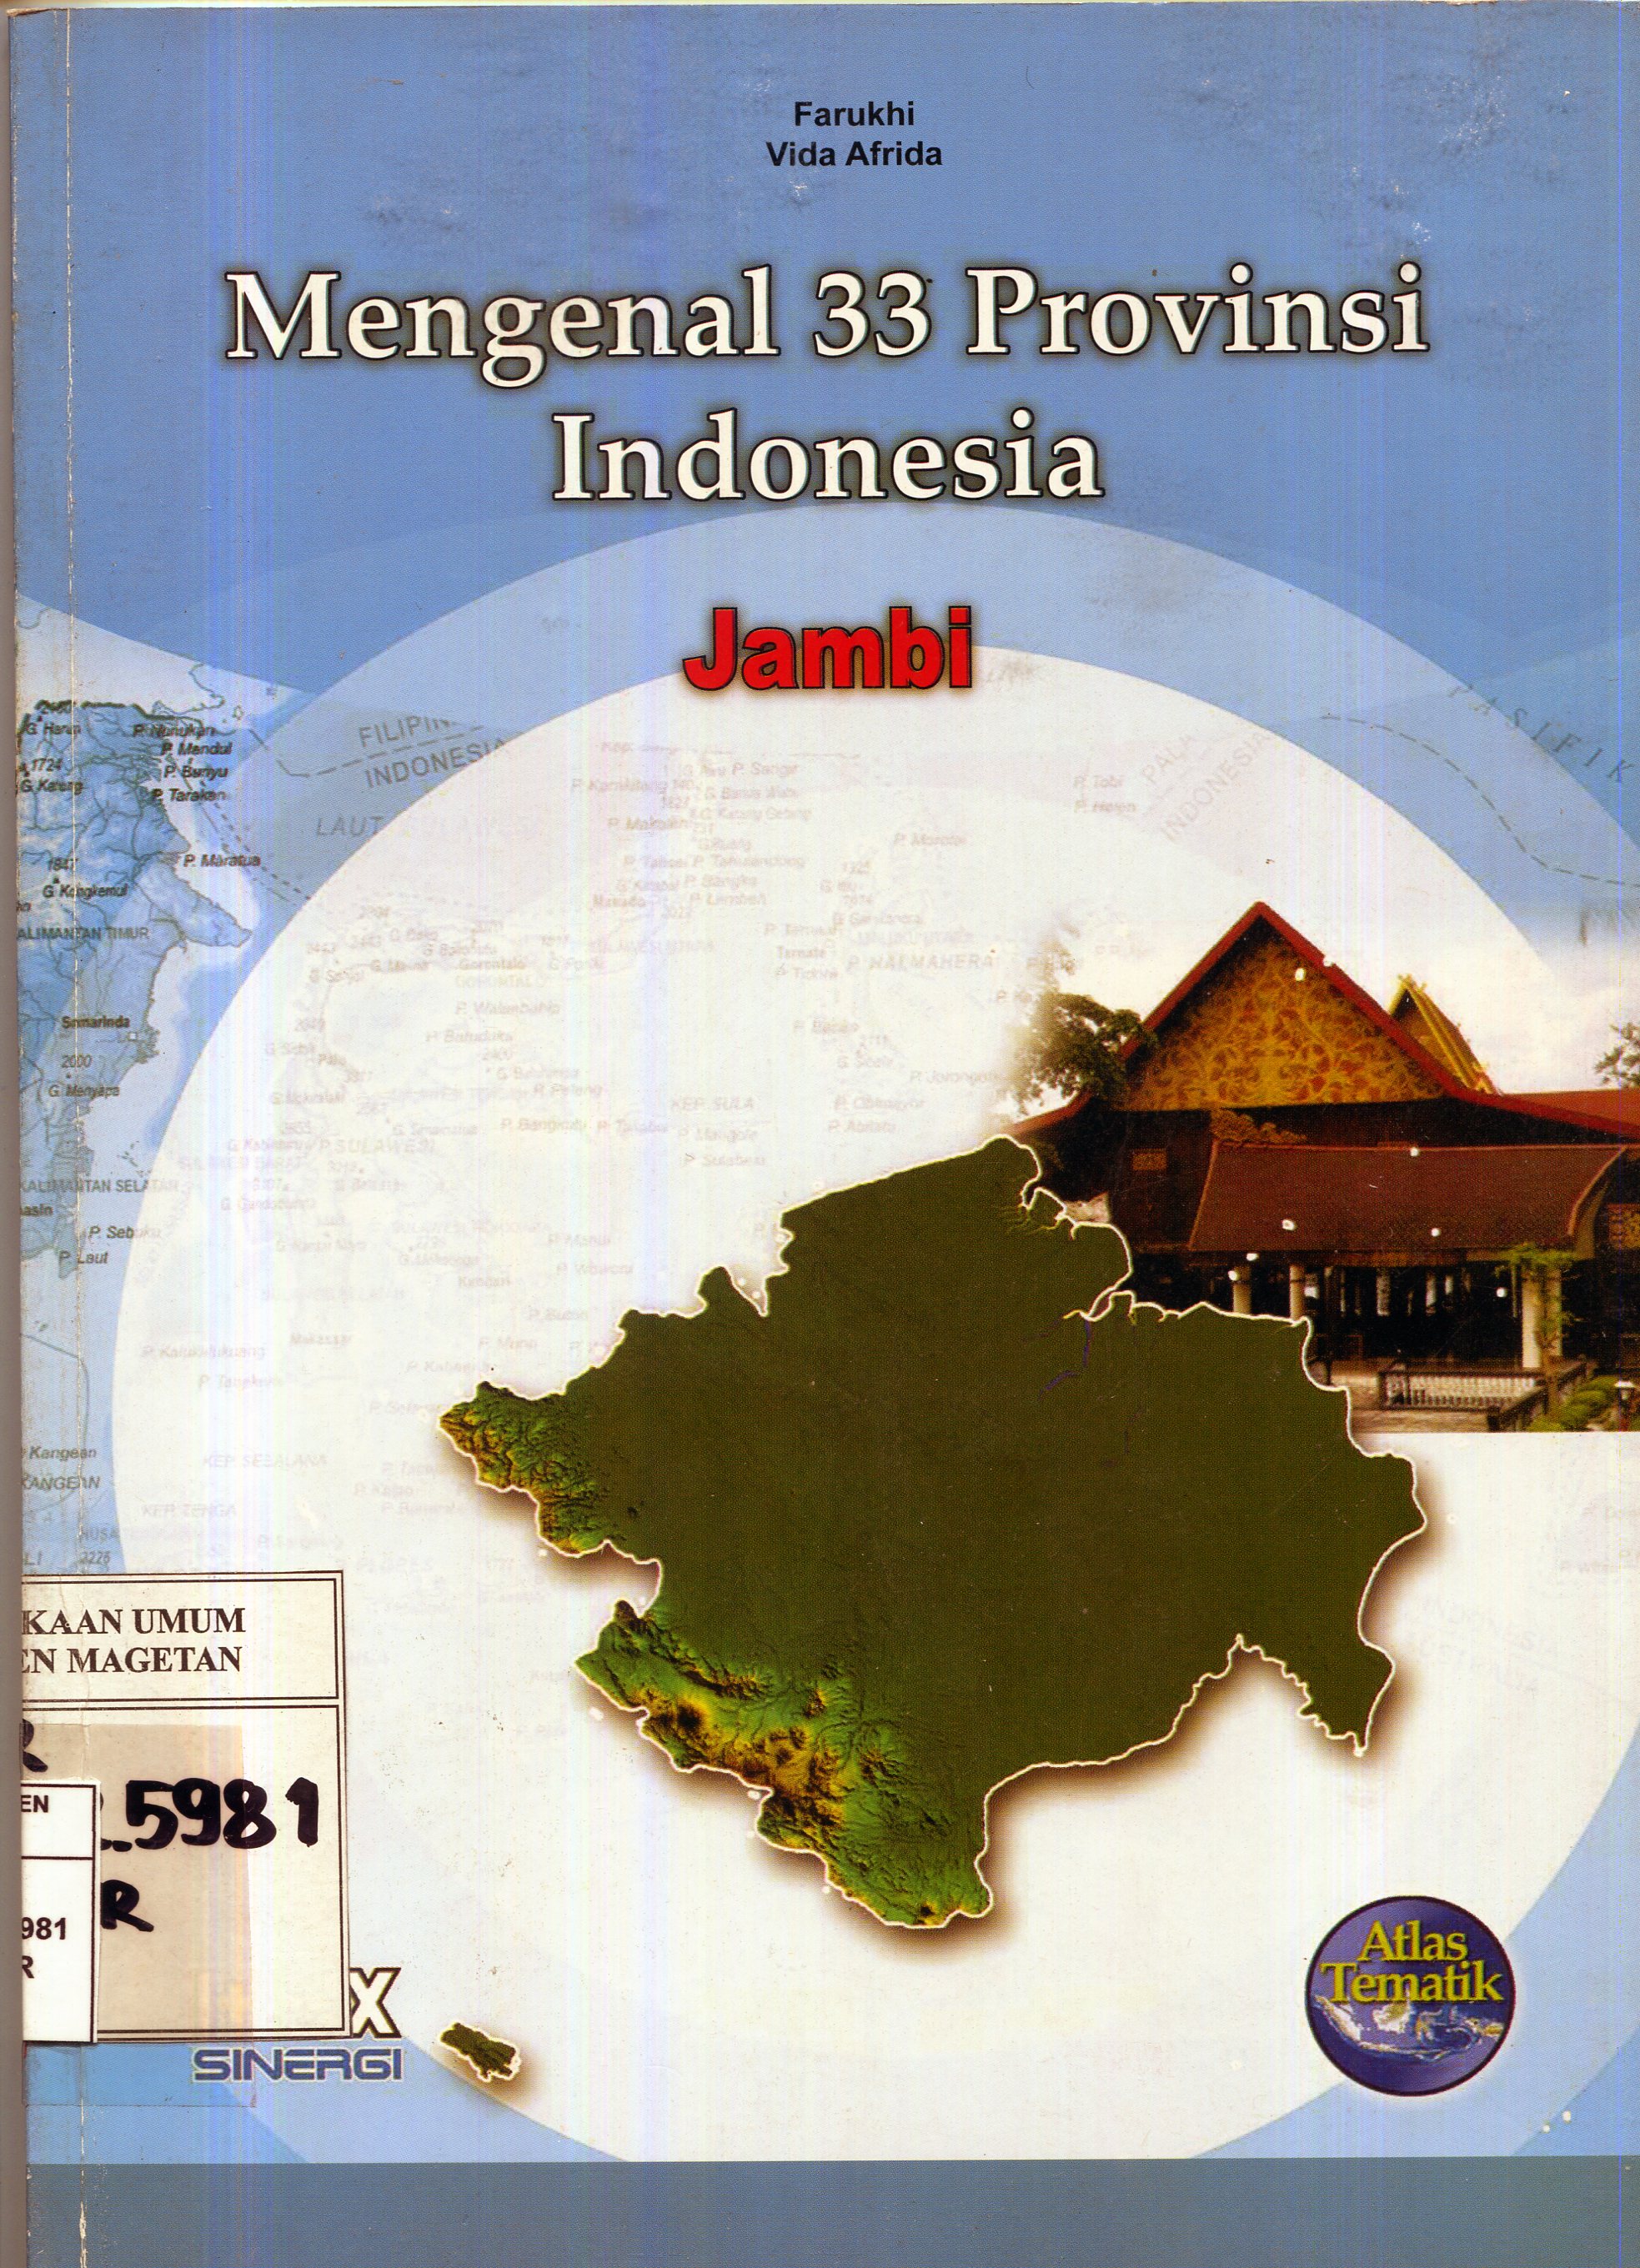 Mengenal 33 Provinsi Indonesia : Jambi